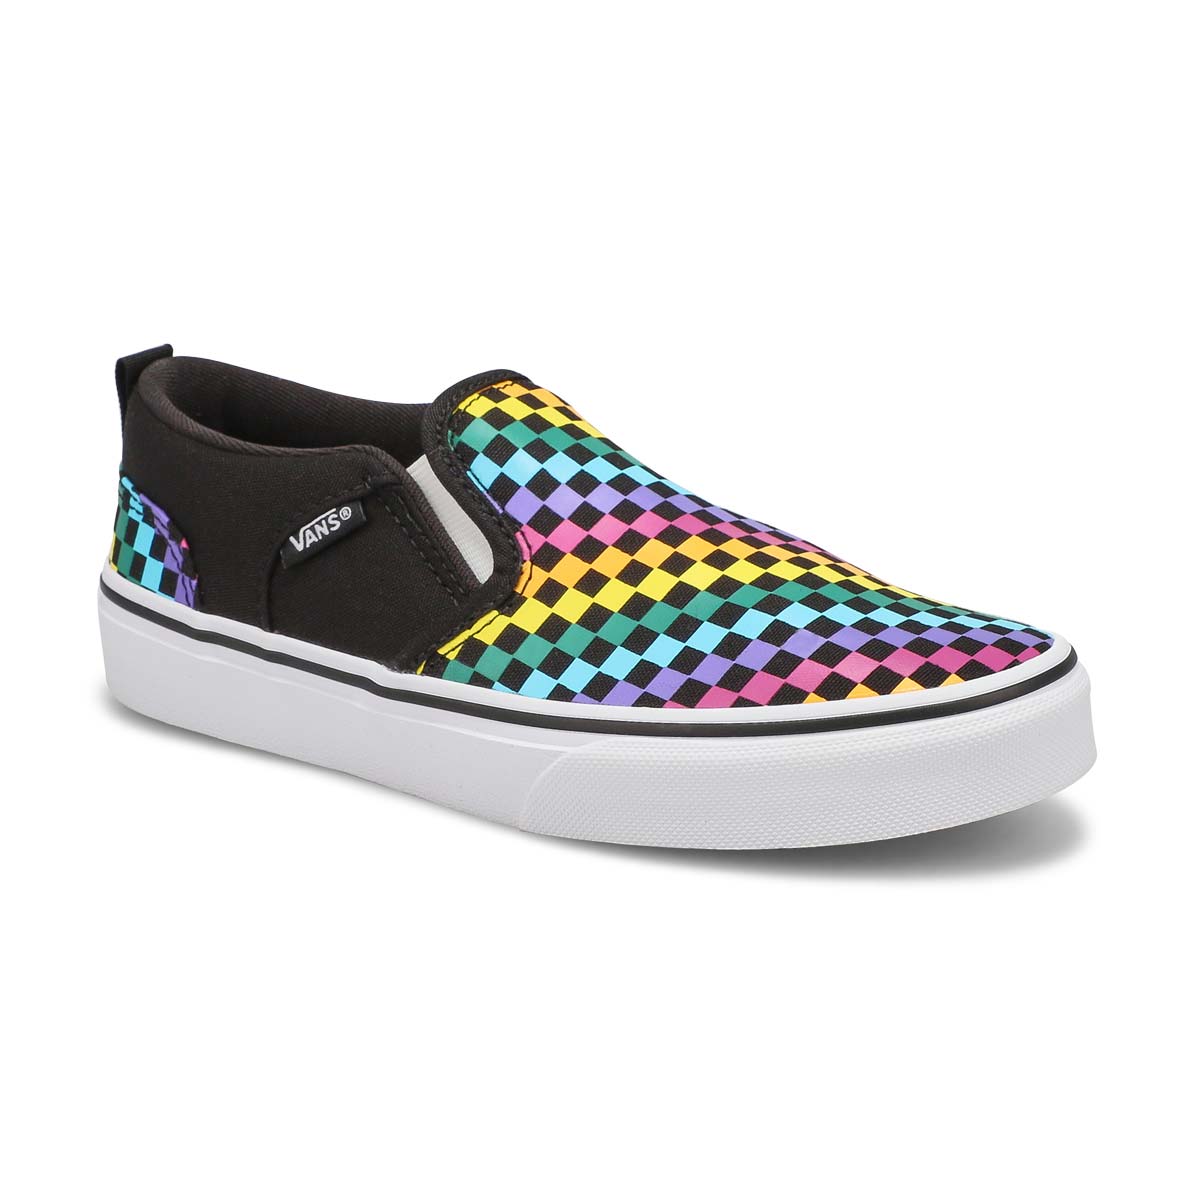 Girls' Asher Checkered Rainbow Sneaker-Black/White